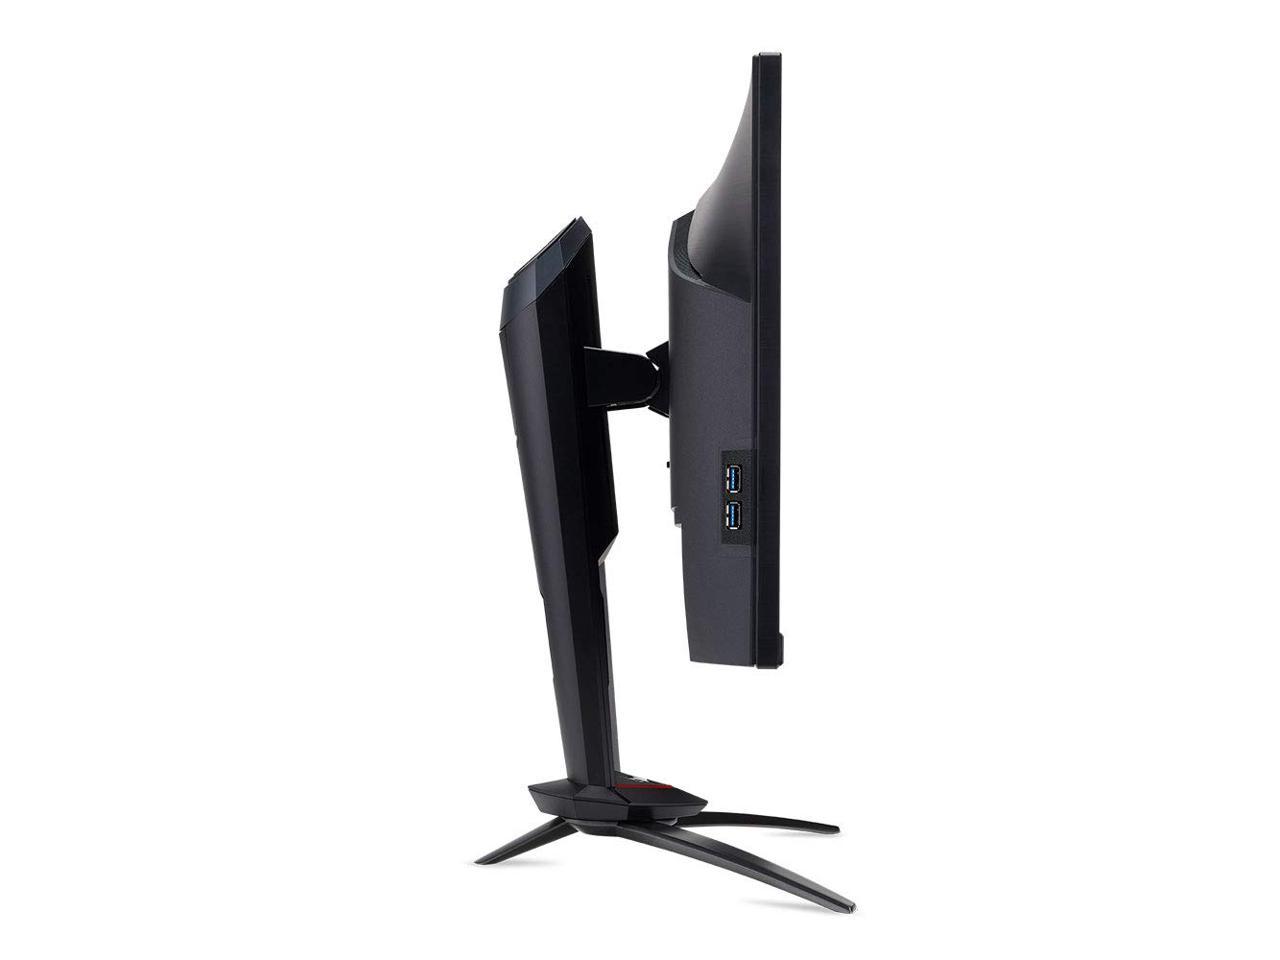 Acer Predator XB273 Pbmiprzx 27" FHD (1920 x 1080) IPS NVIDIA G-SYNC Gaming Monitor with 4ms (G to G), 144Hz, 99% sRGB (1 x Display Port & 1 x HDMI Port),Black